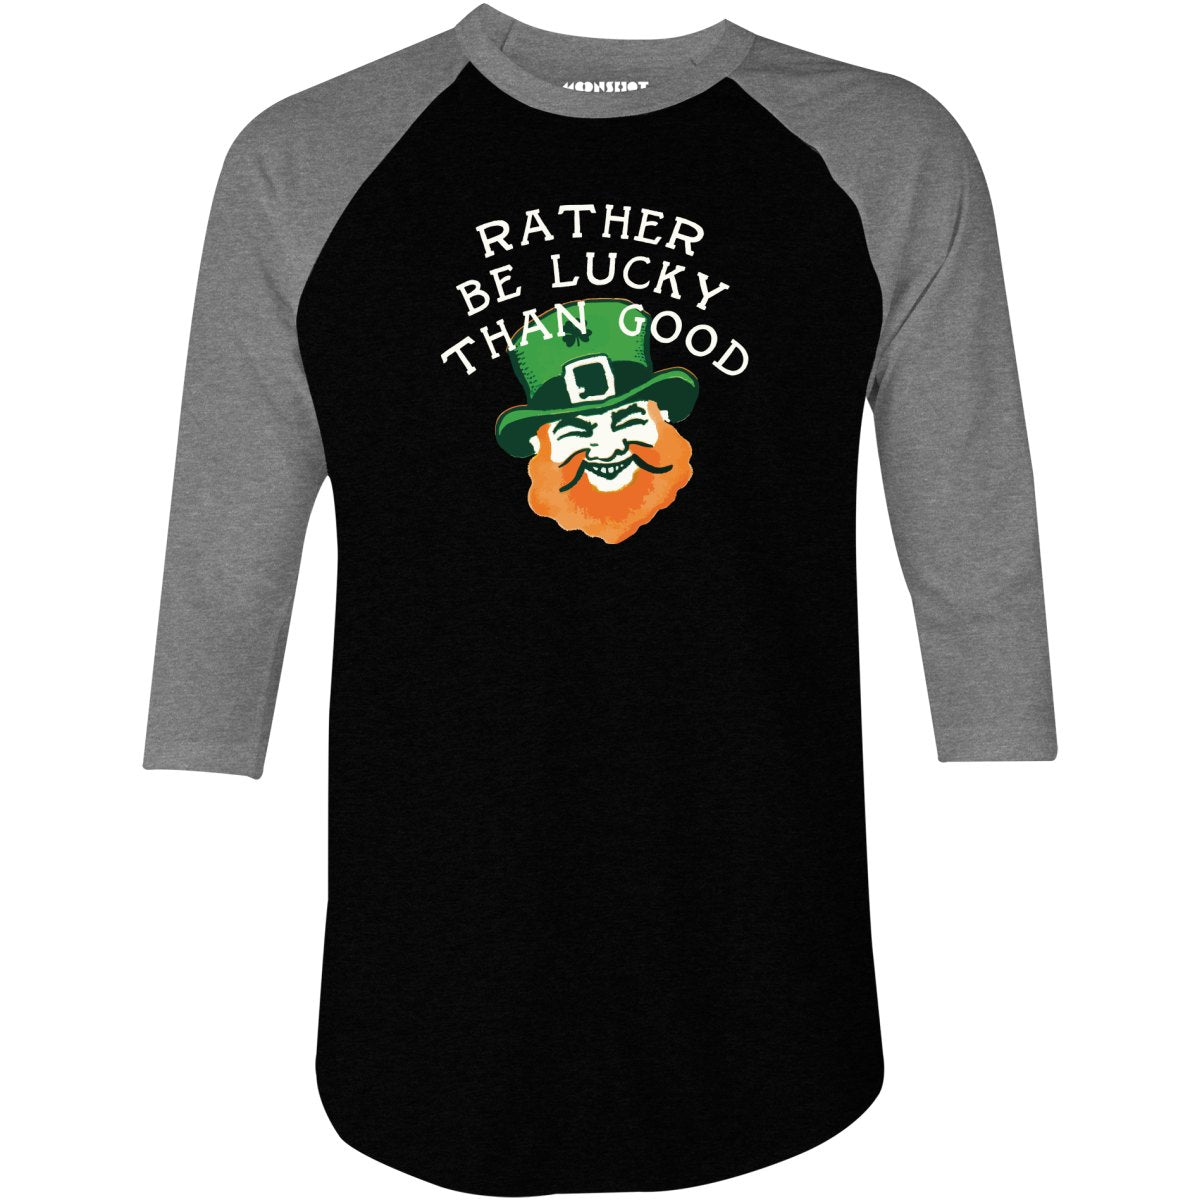 Rather Be Lucky Than Good - 3/4 Sleeve Raglan T-Shirt